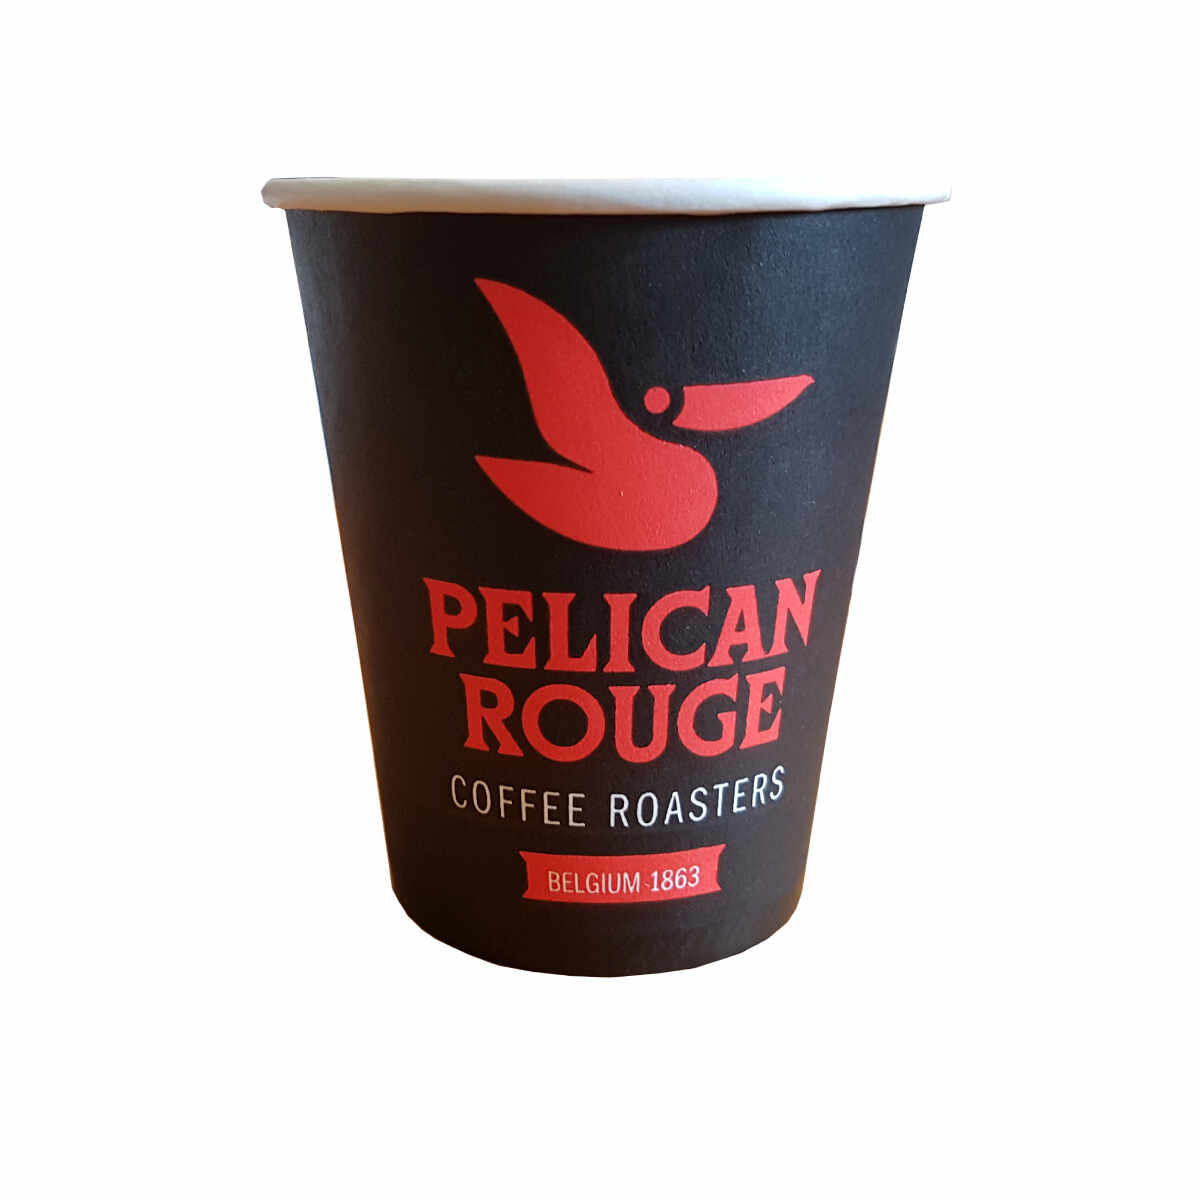 Pelican Rouge pahare carton 8 oz bax 1000 buc